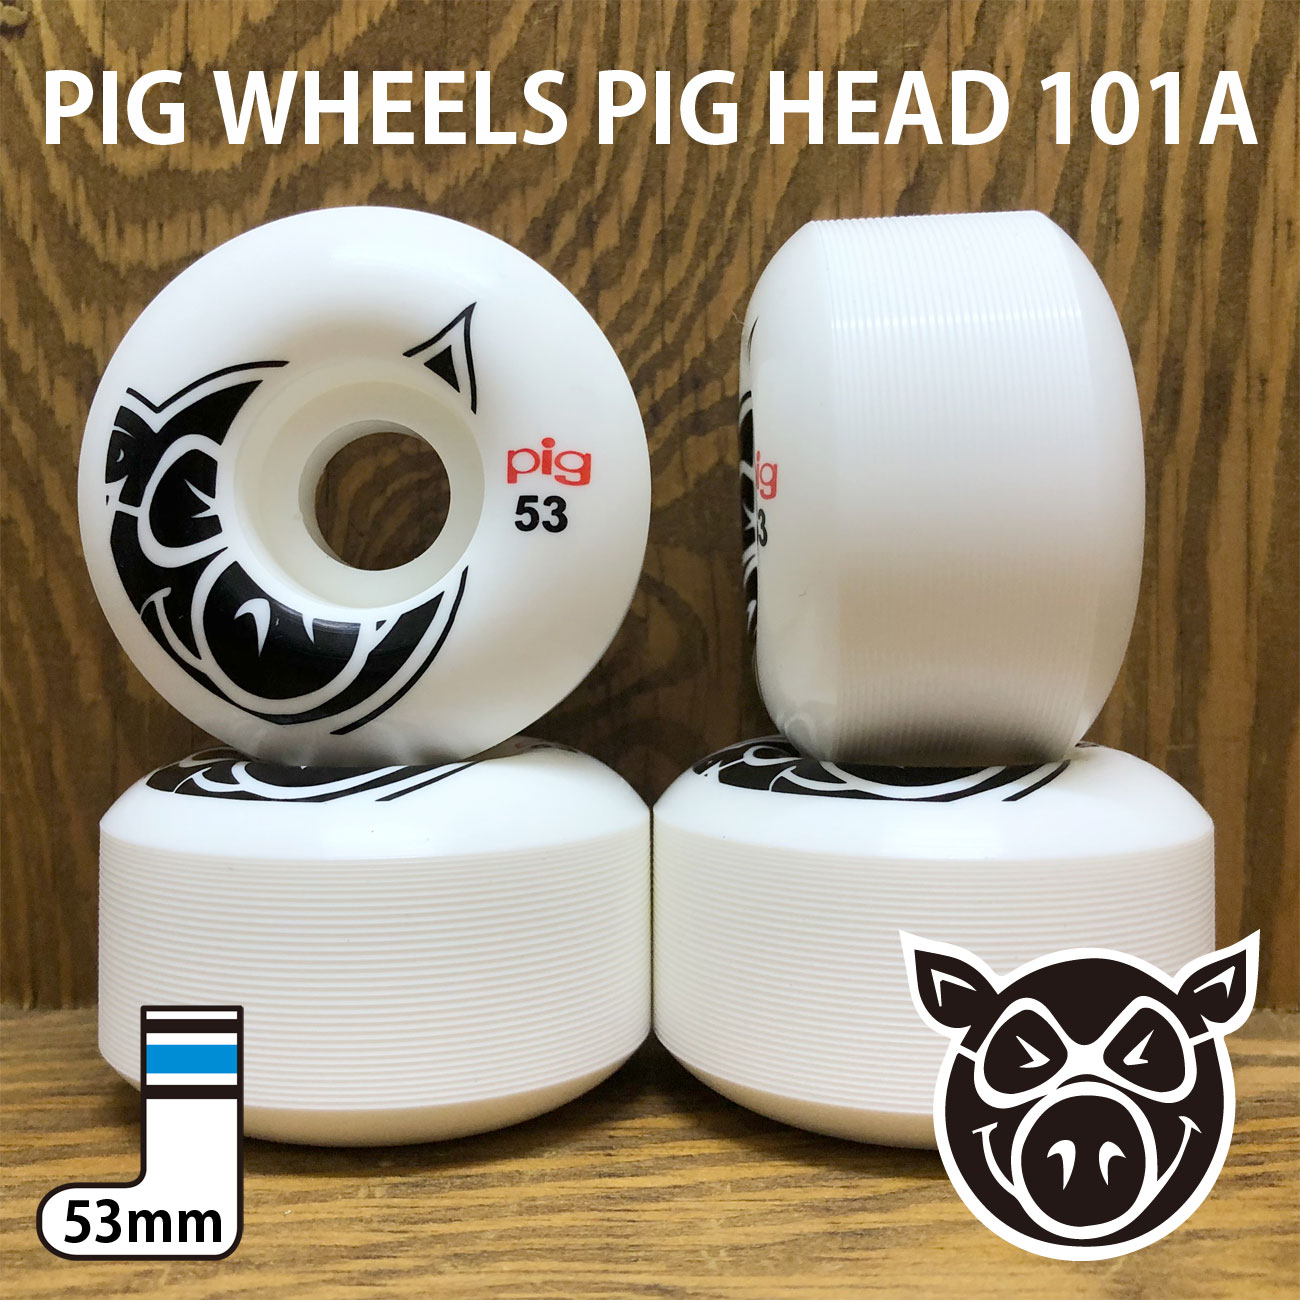 PIG WHEELS PIG HEAD 101A 53mm